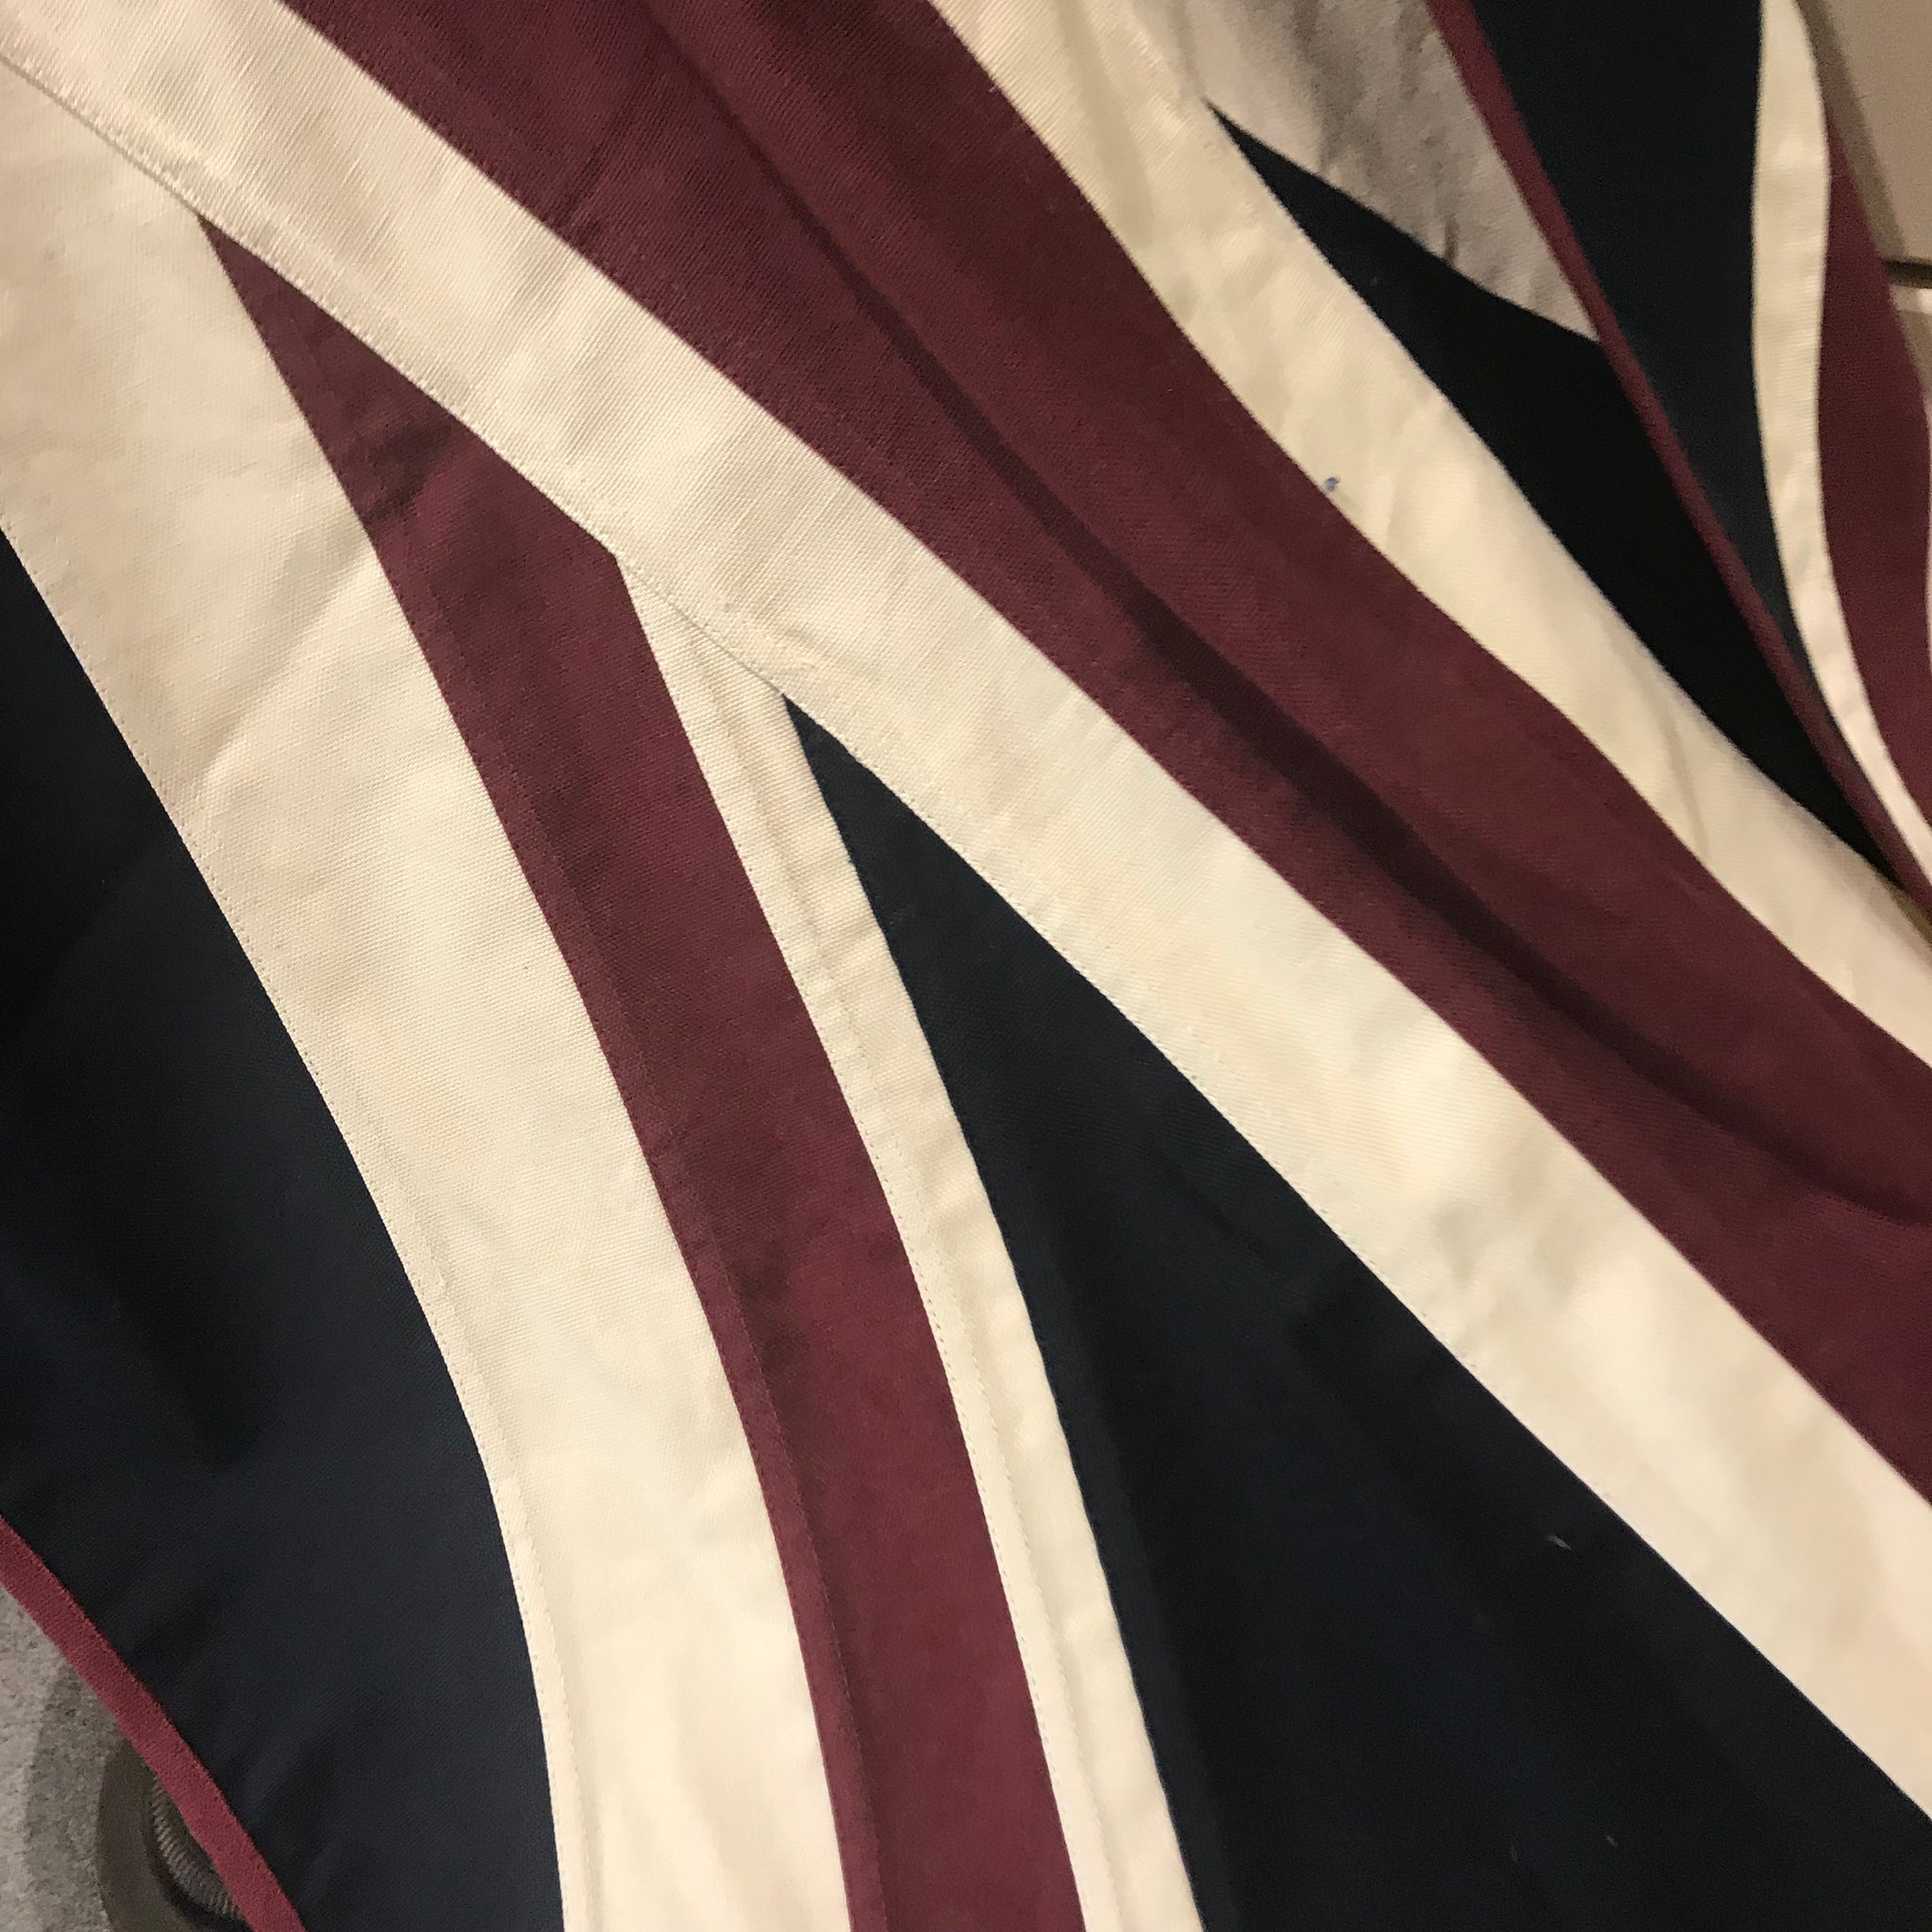 60” x 30” London union flag